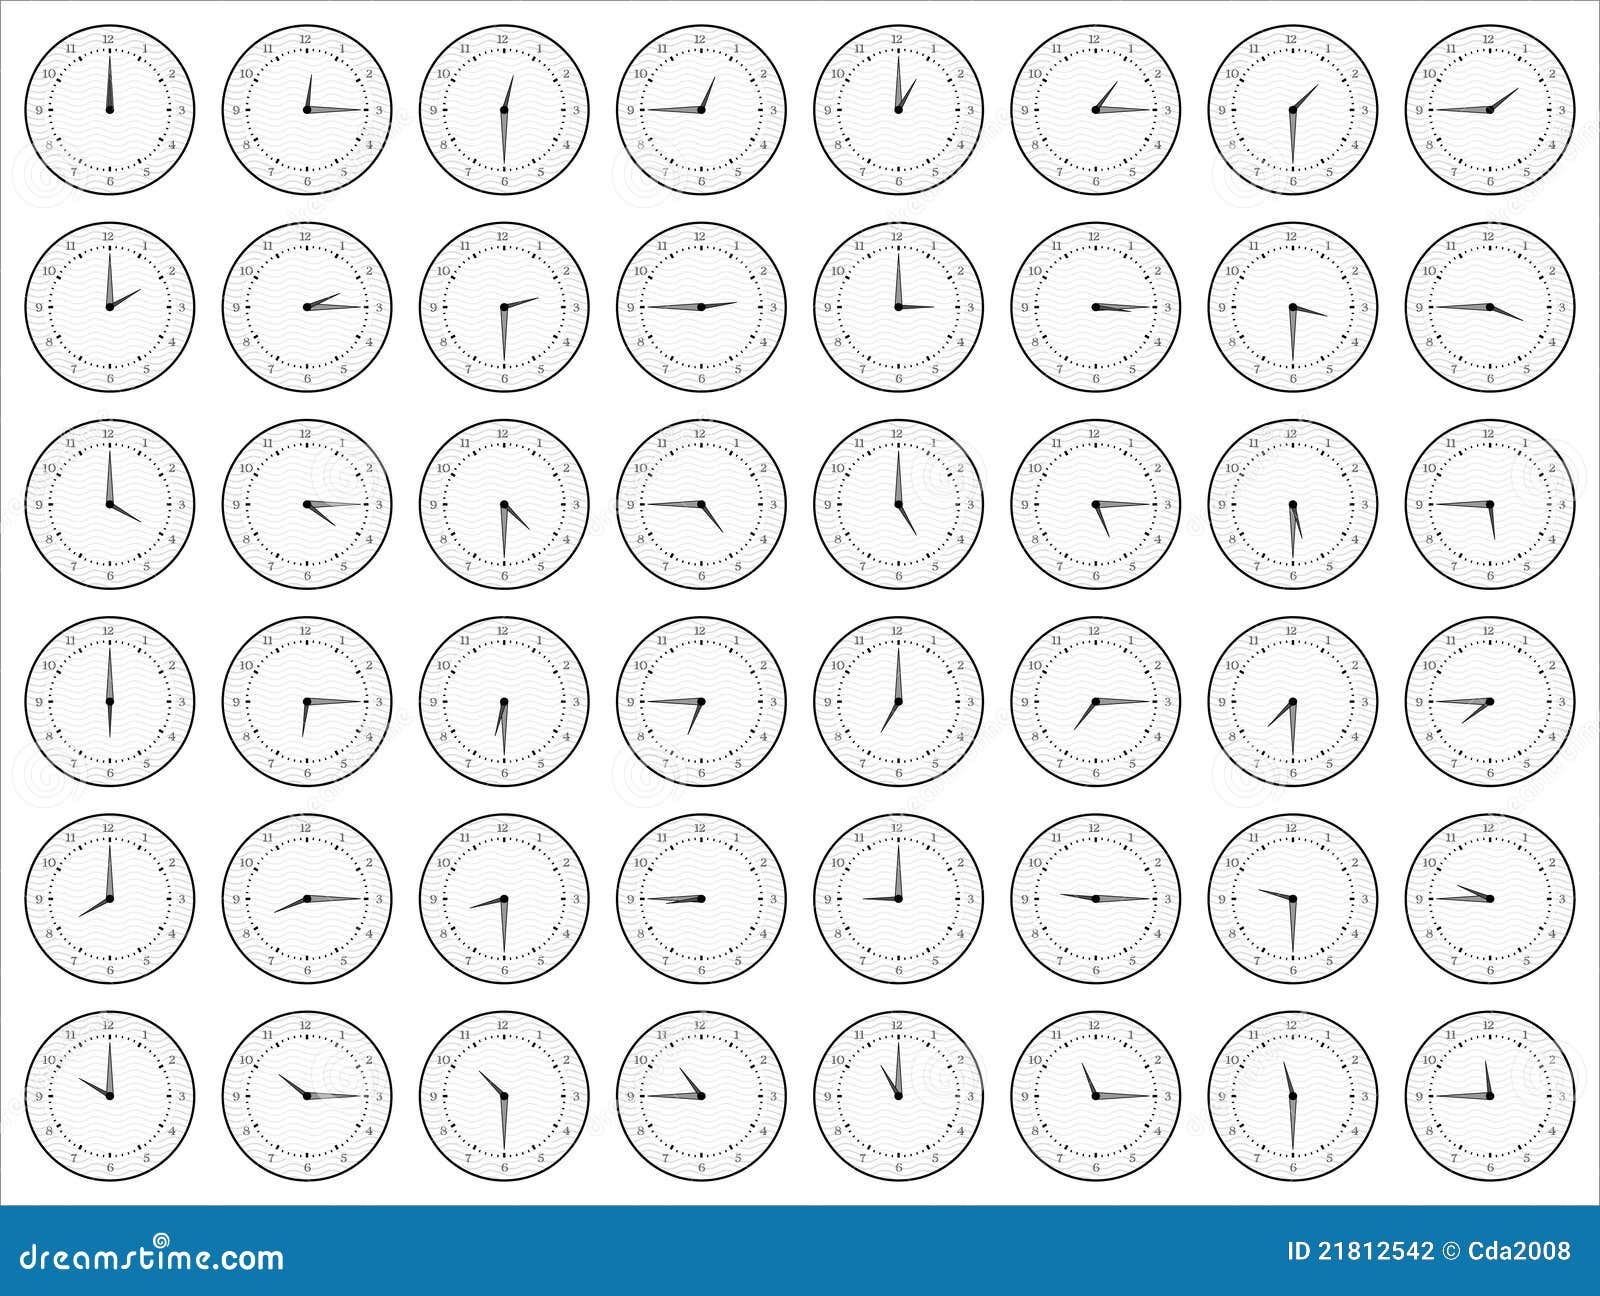 black and white analog clocks showing time